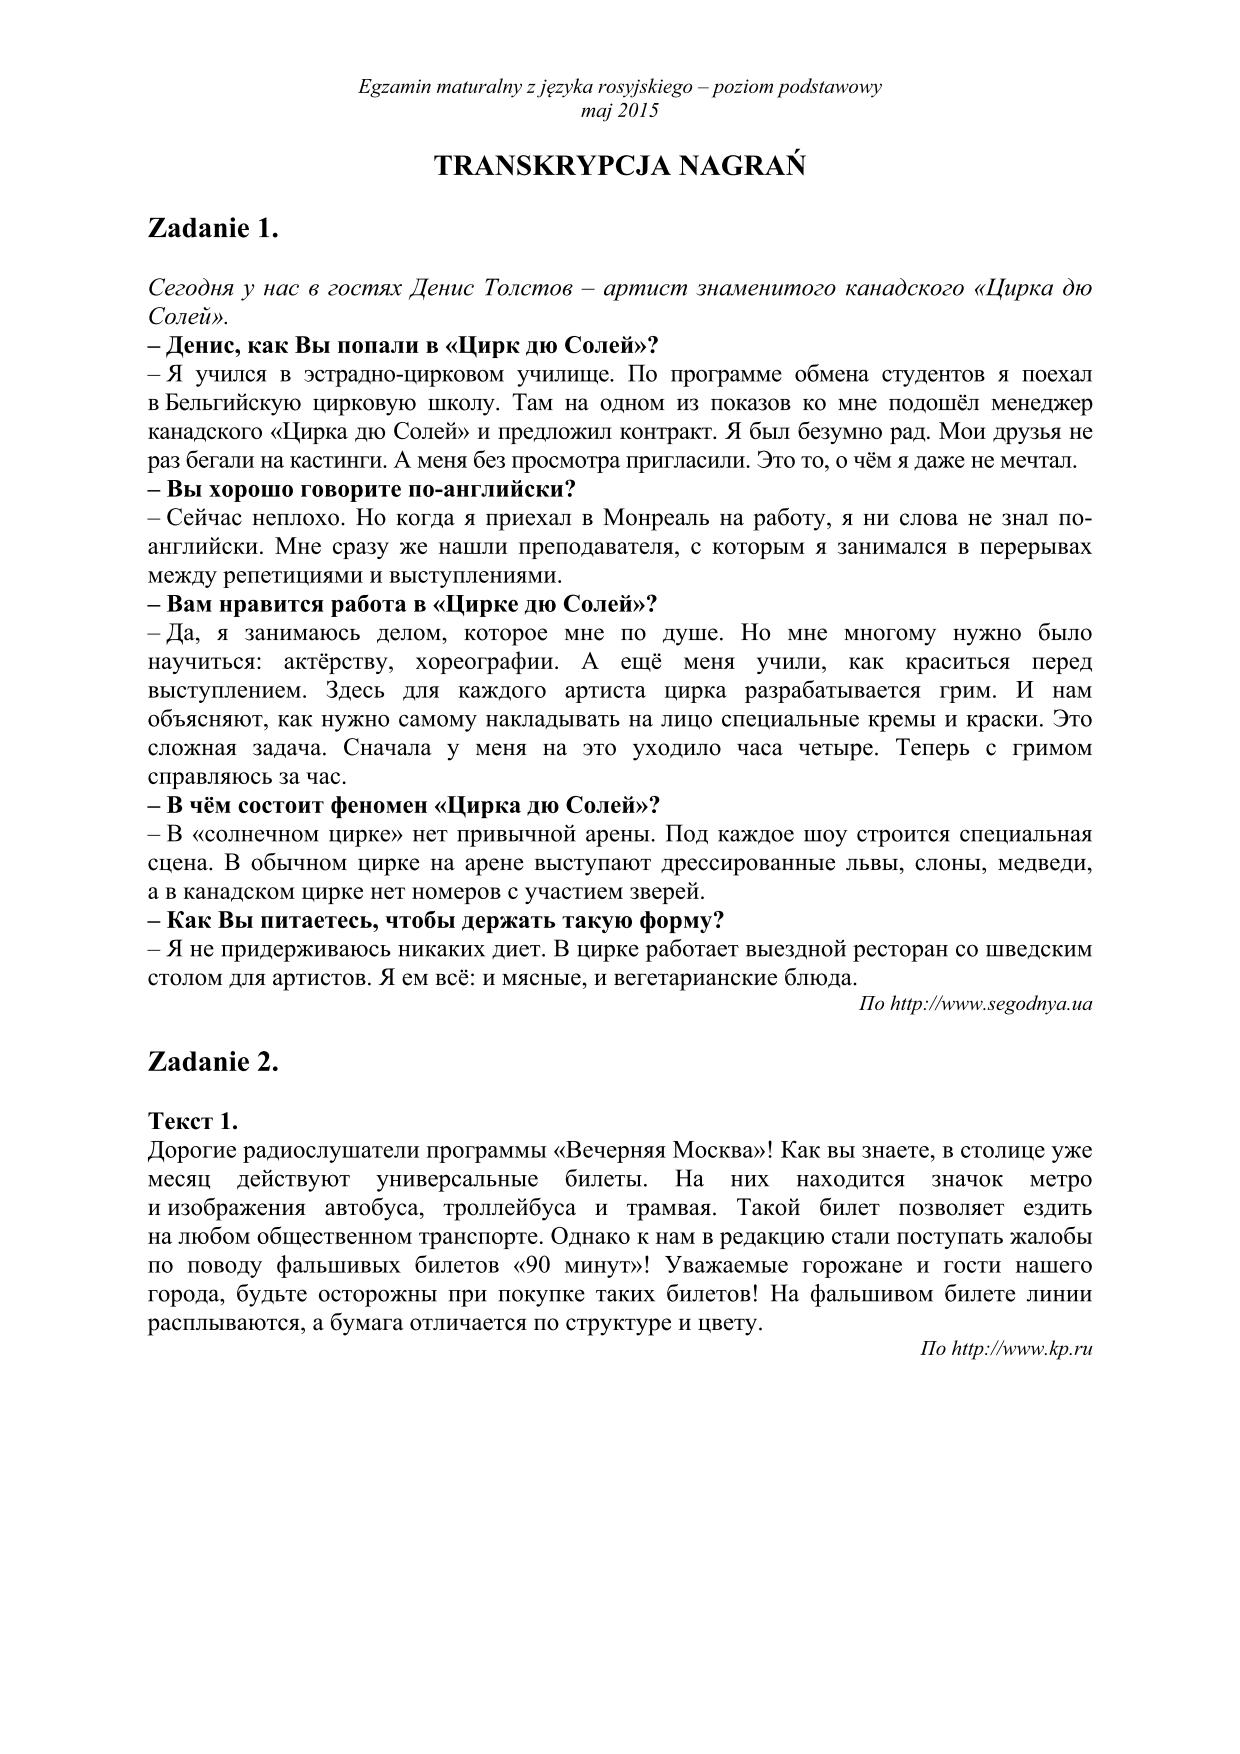 transkrypcja-rosyjski-poziom-podstawowy-matura-2015-1